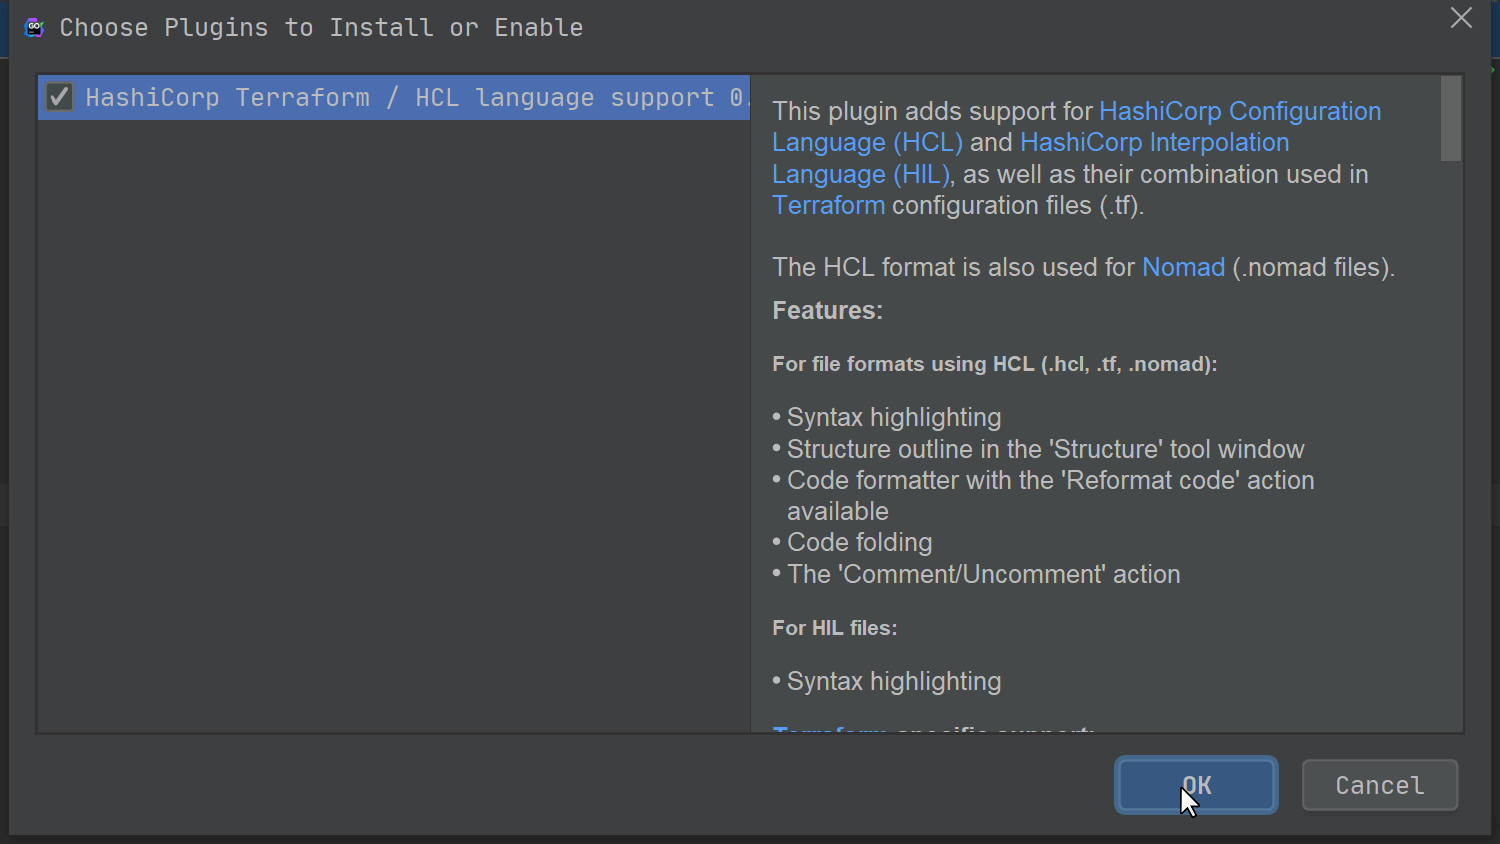 HashiCorp Terraform/HCL language support plugin